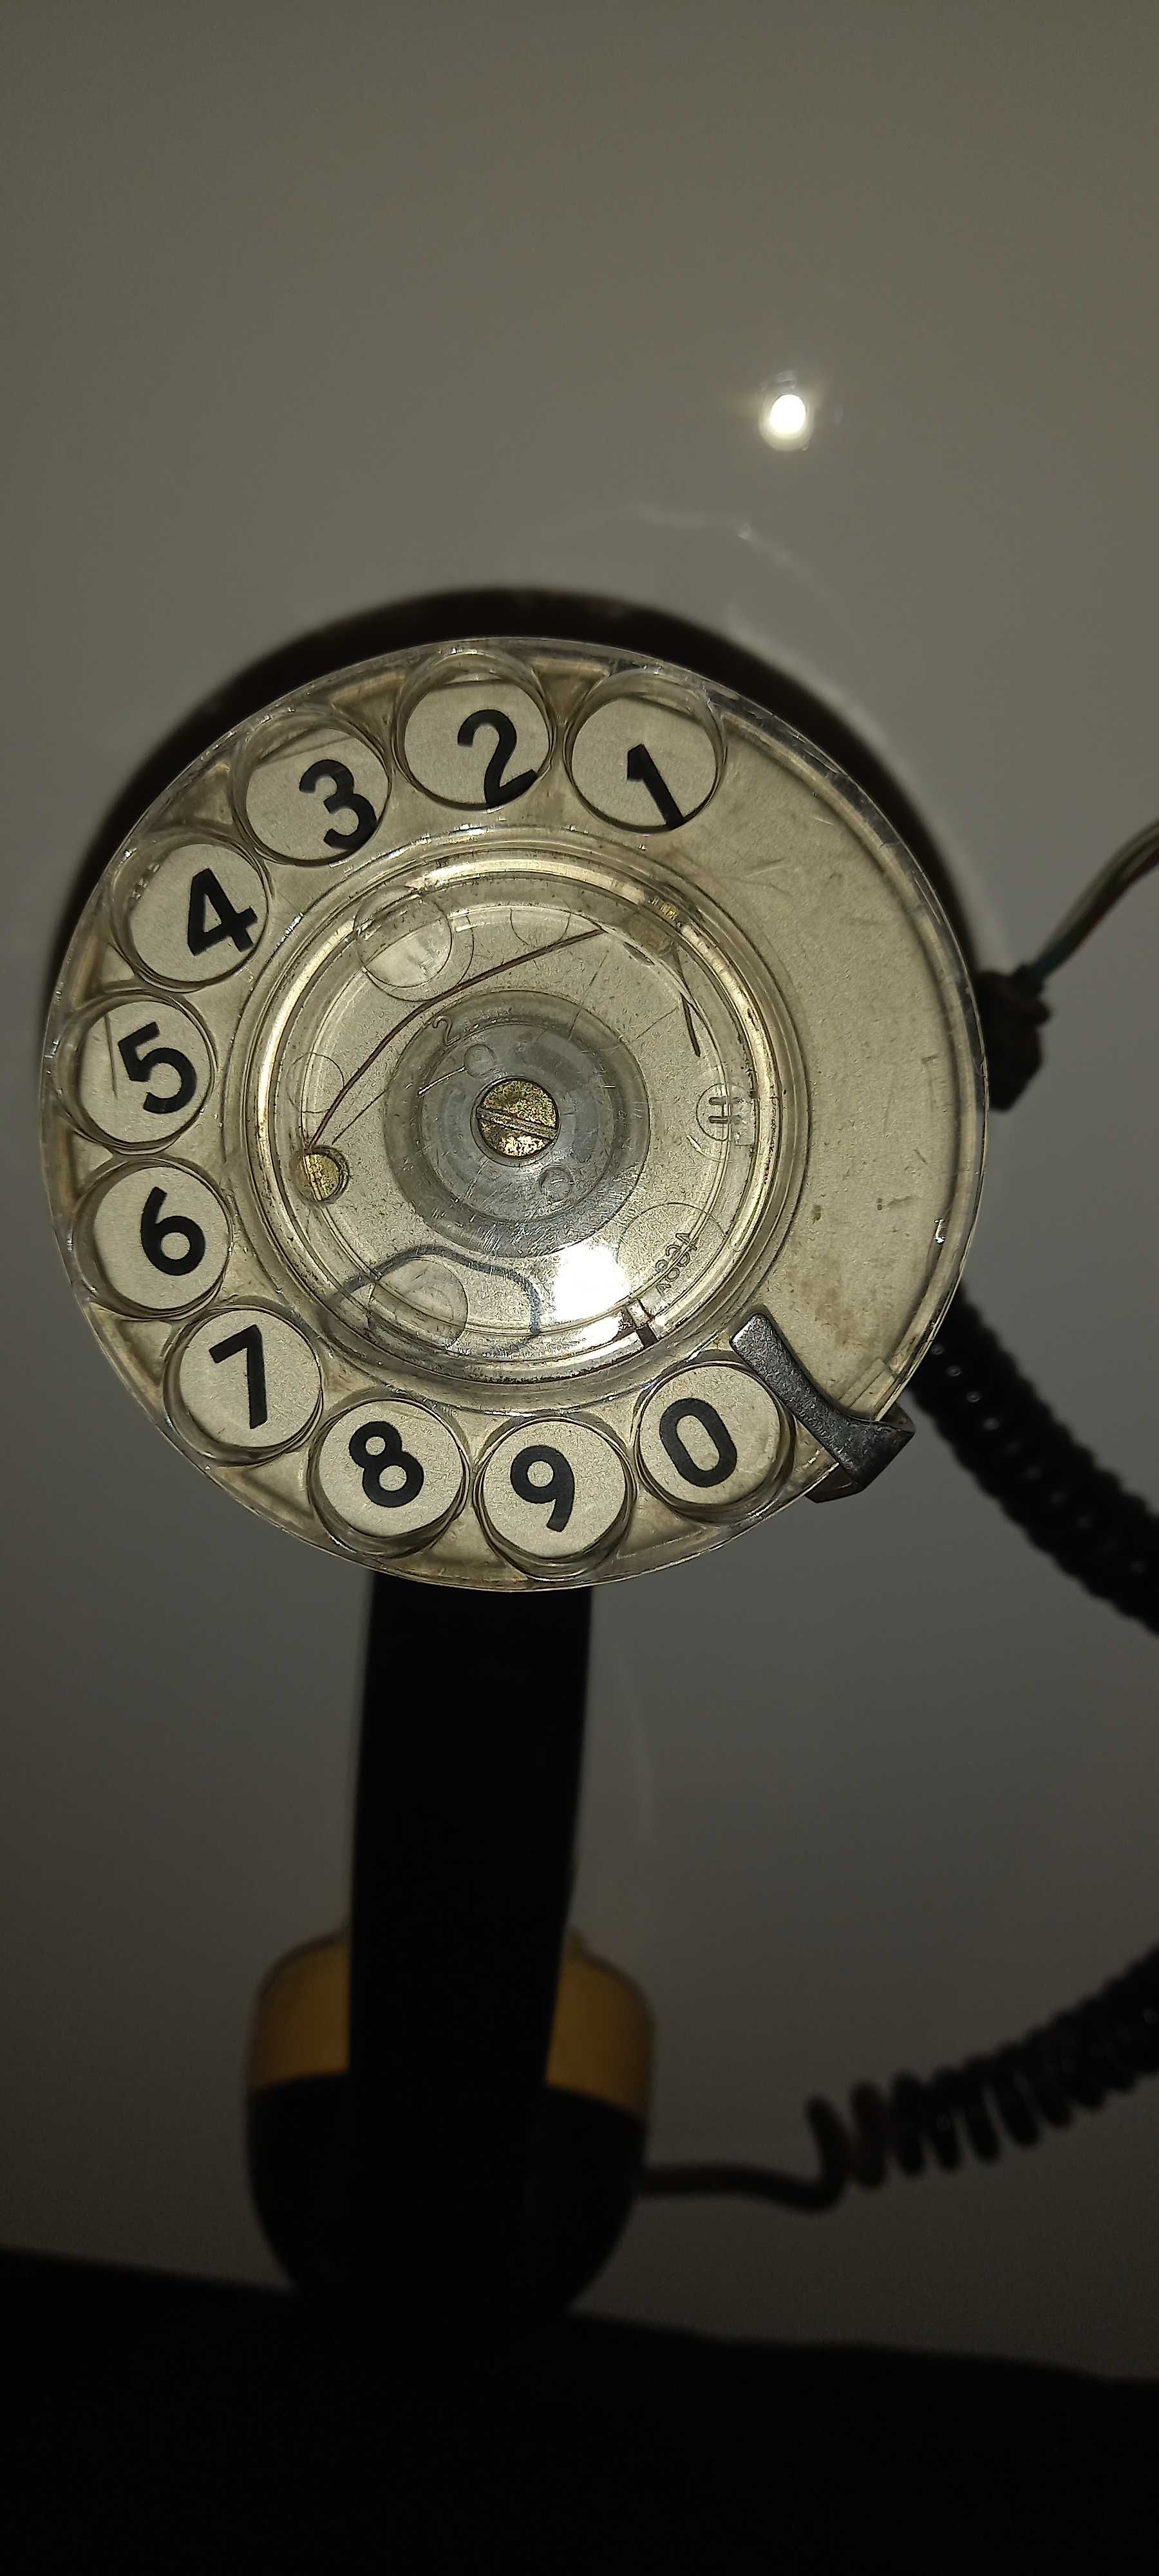 Telefone fixo antigo profissional